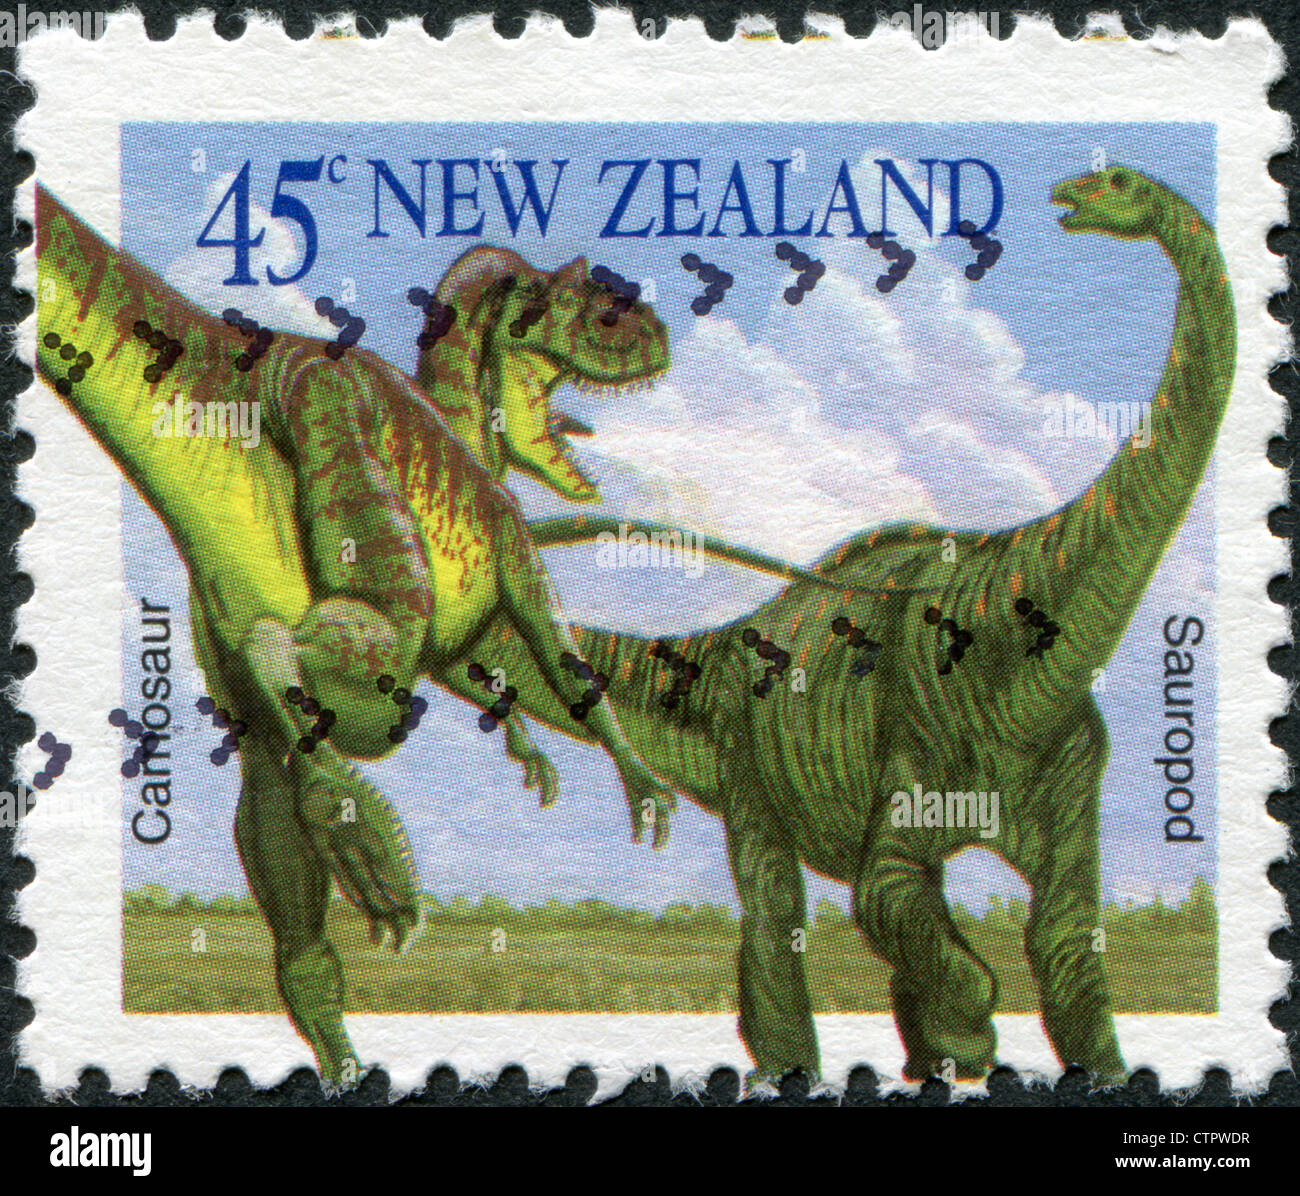 NEW ZEALAND - CIRCA 1993: Postage stamps printed in New Zealand, shows dinosaurs - Carnosaur, sauropod, circa 1993 Stock Photo